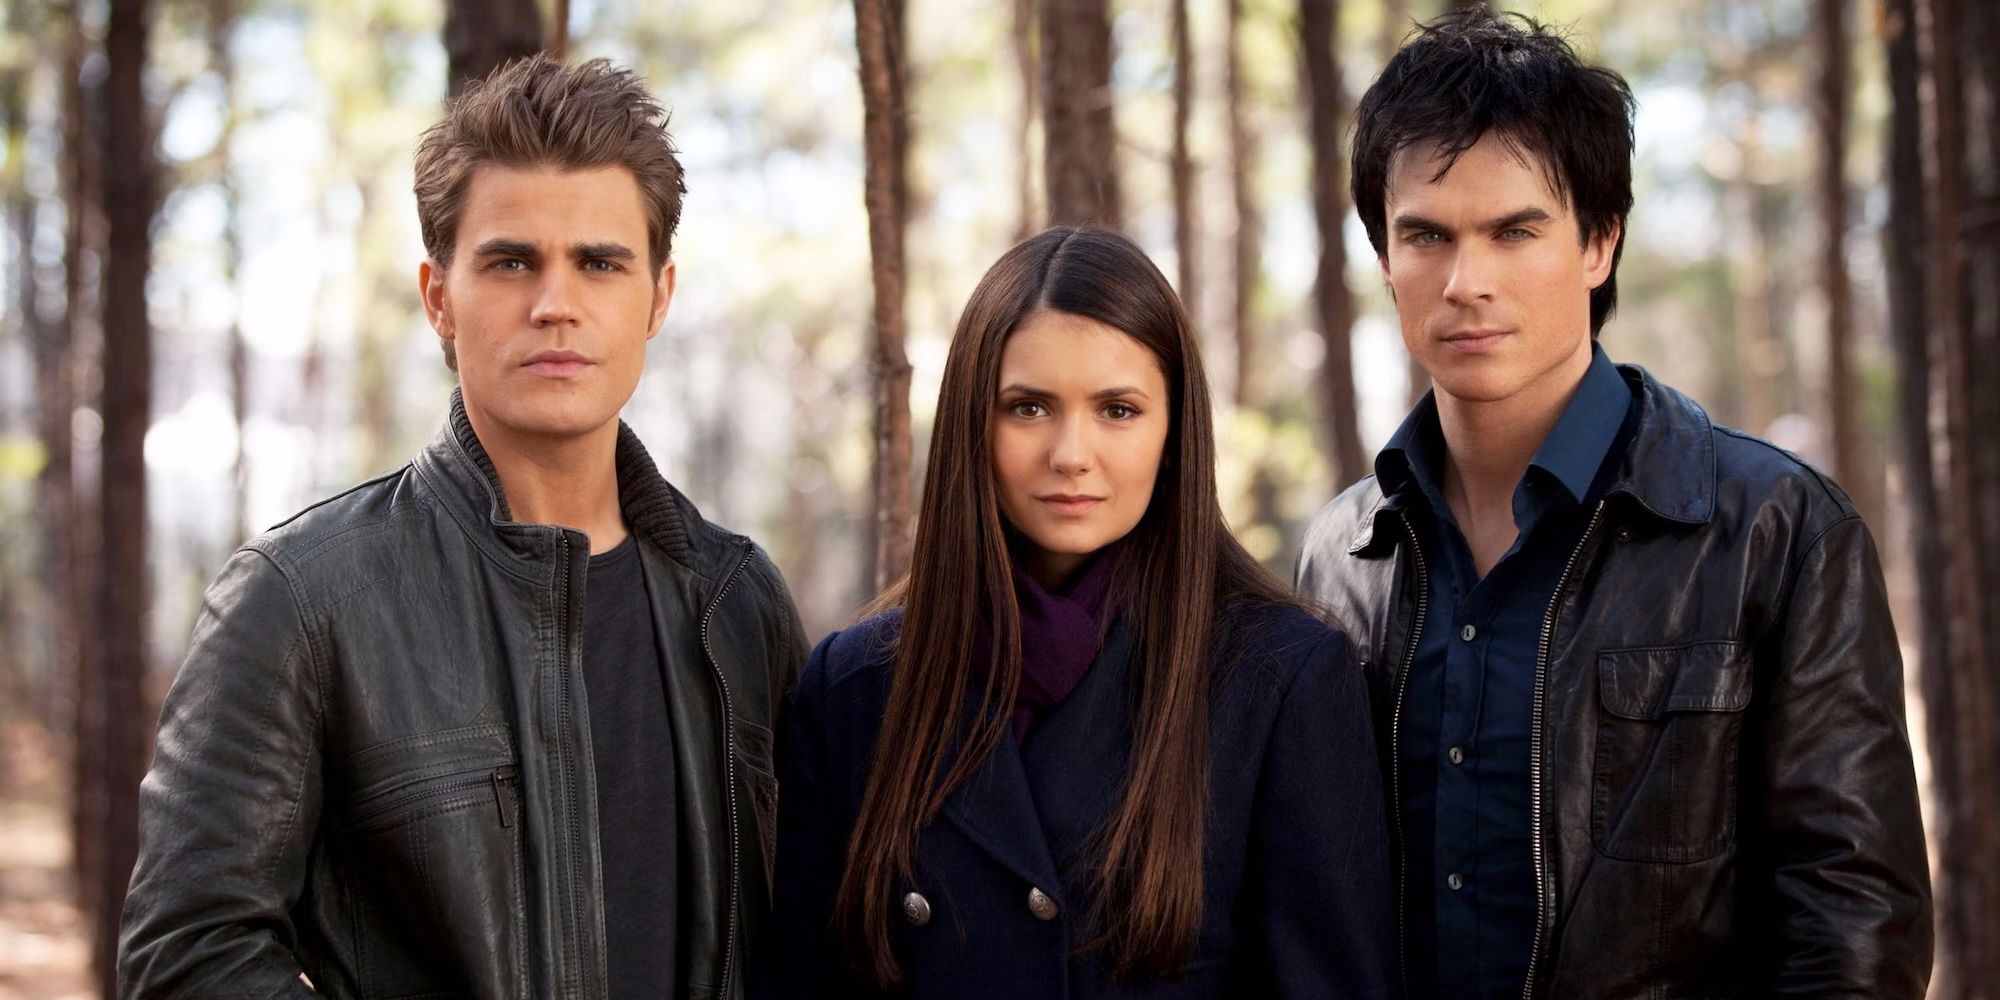 Stefan Damon and Elena in The Vampire Diaries